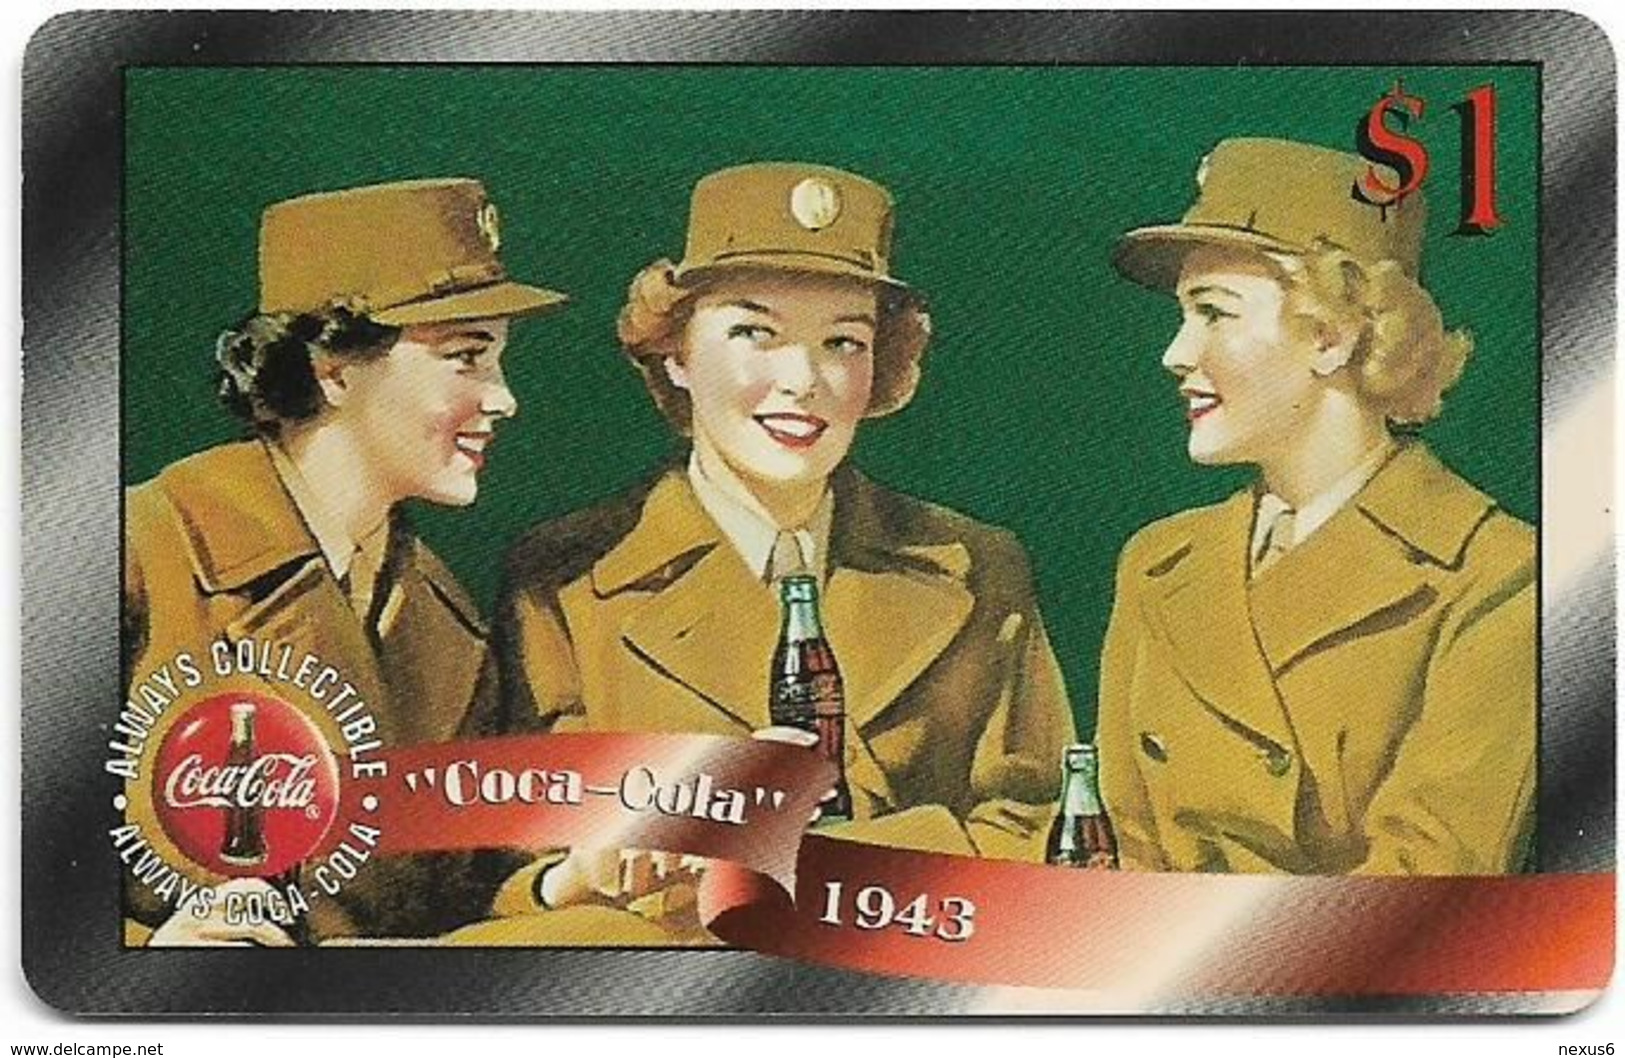 USA - Sprint - Coca Cola Score Board SBI - SBI-679 - Coca Cola #9, Remote Mem. 1$, 04.1996, Mint - Sprint